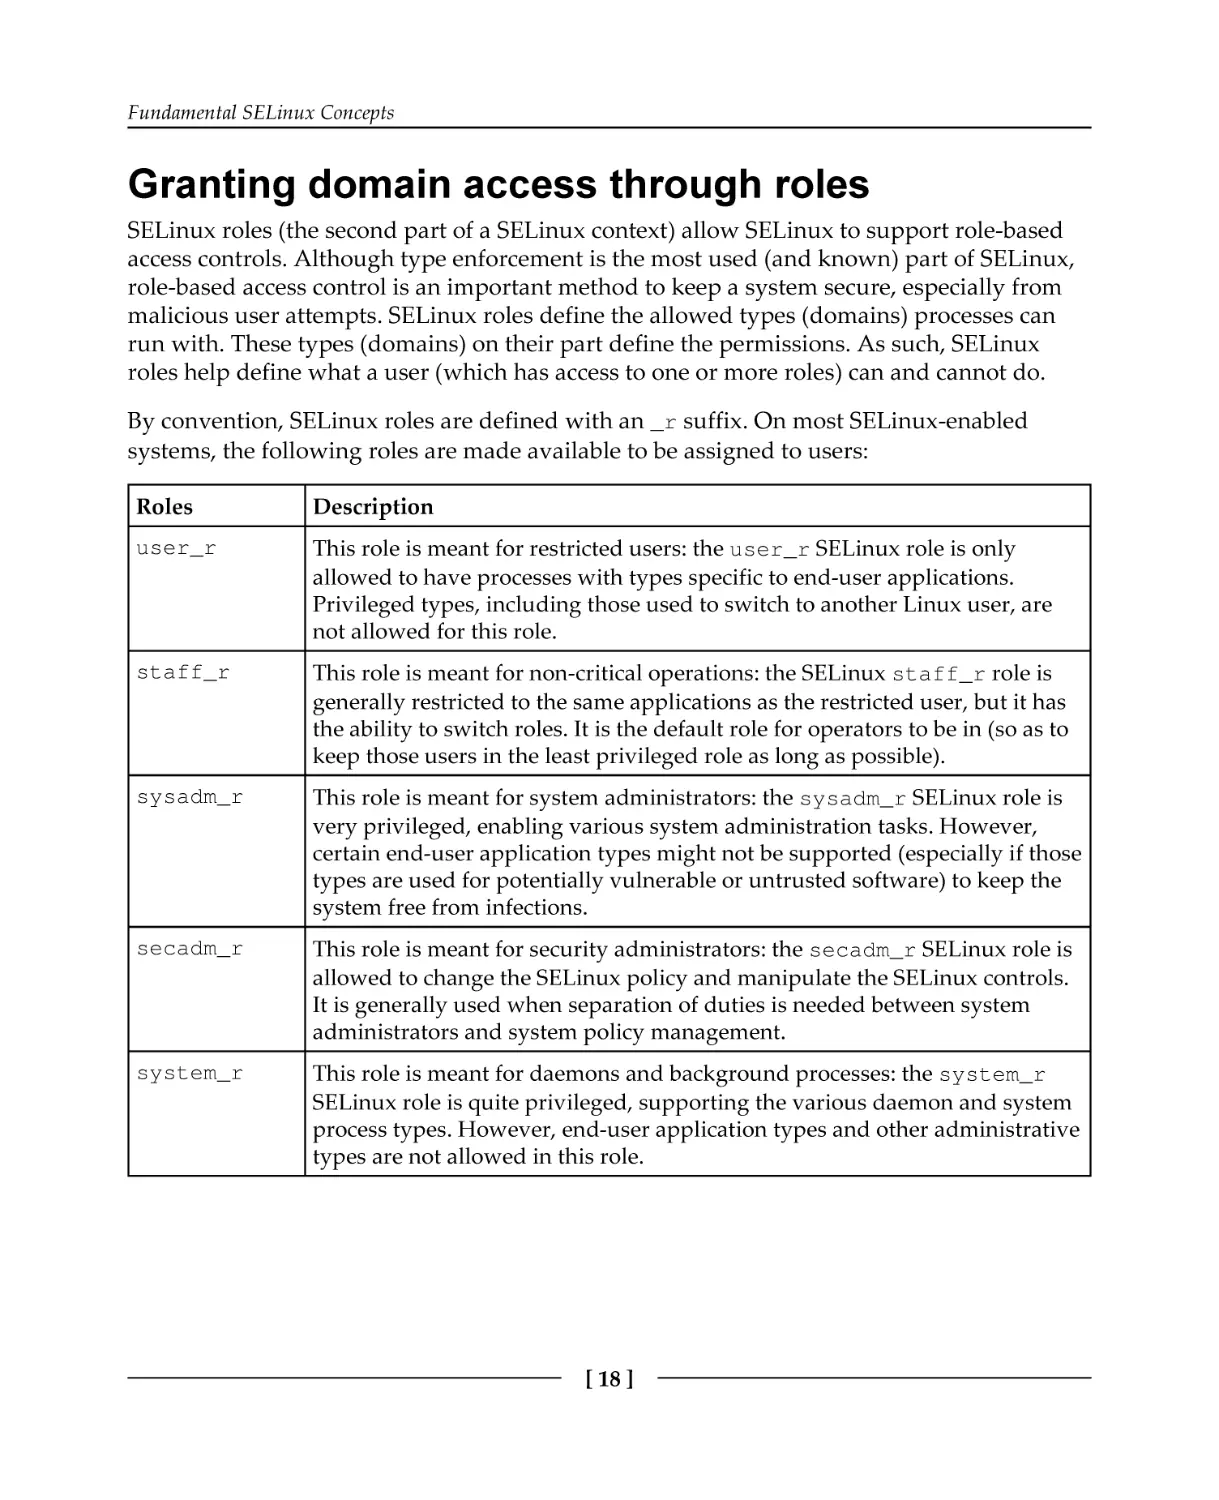 Granting domain access through roles